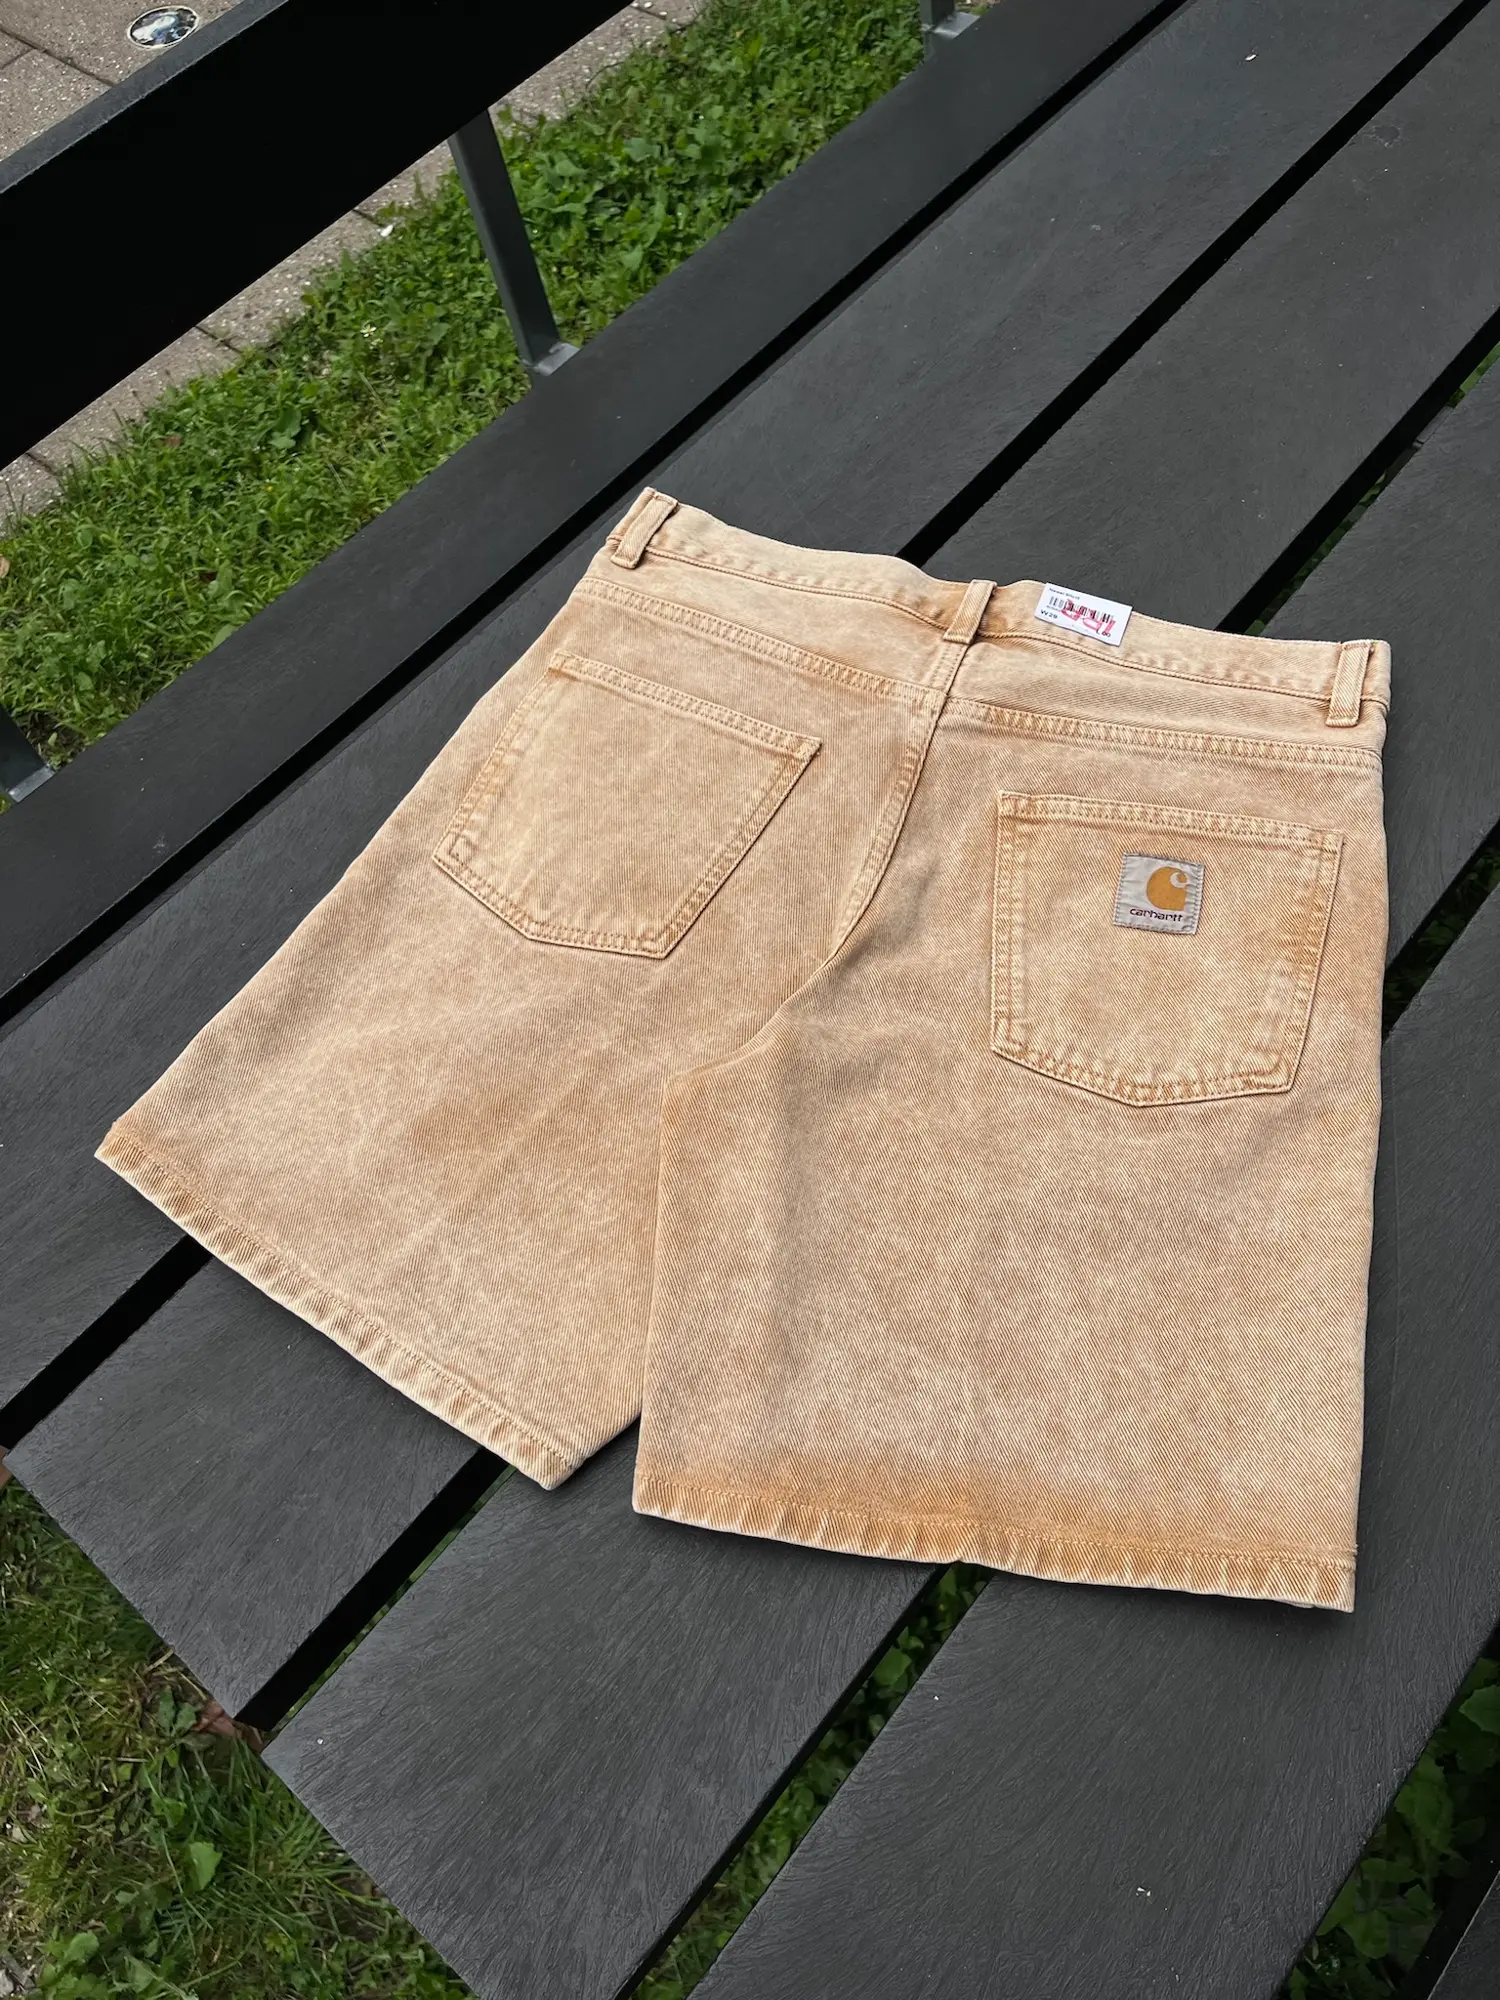 Carhartt shorts